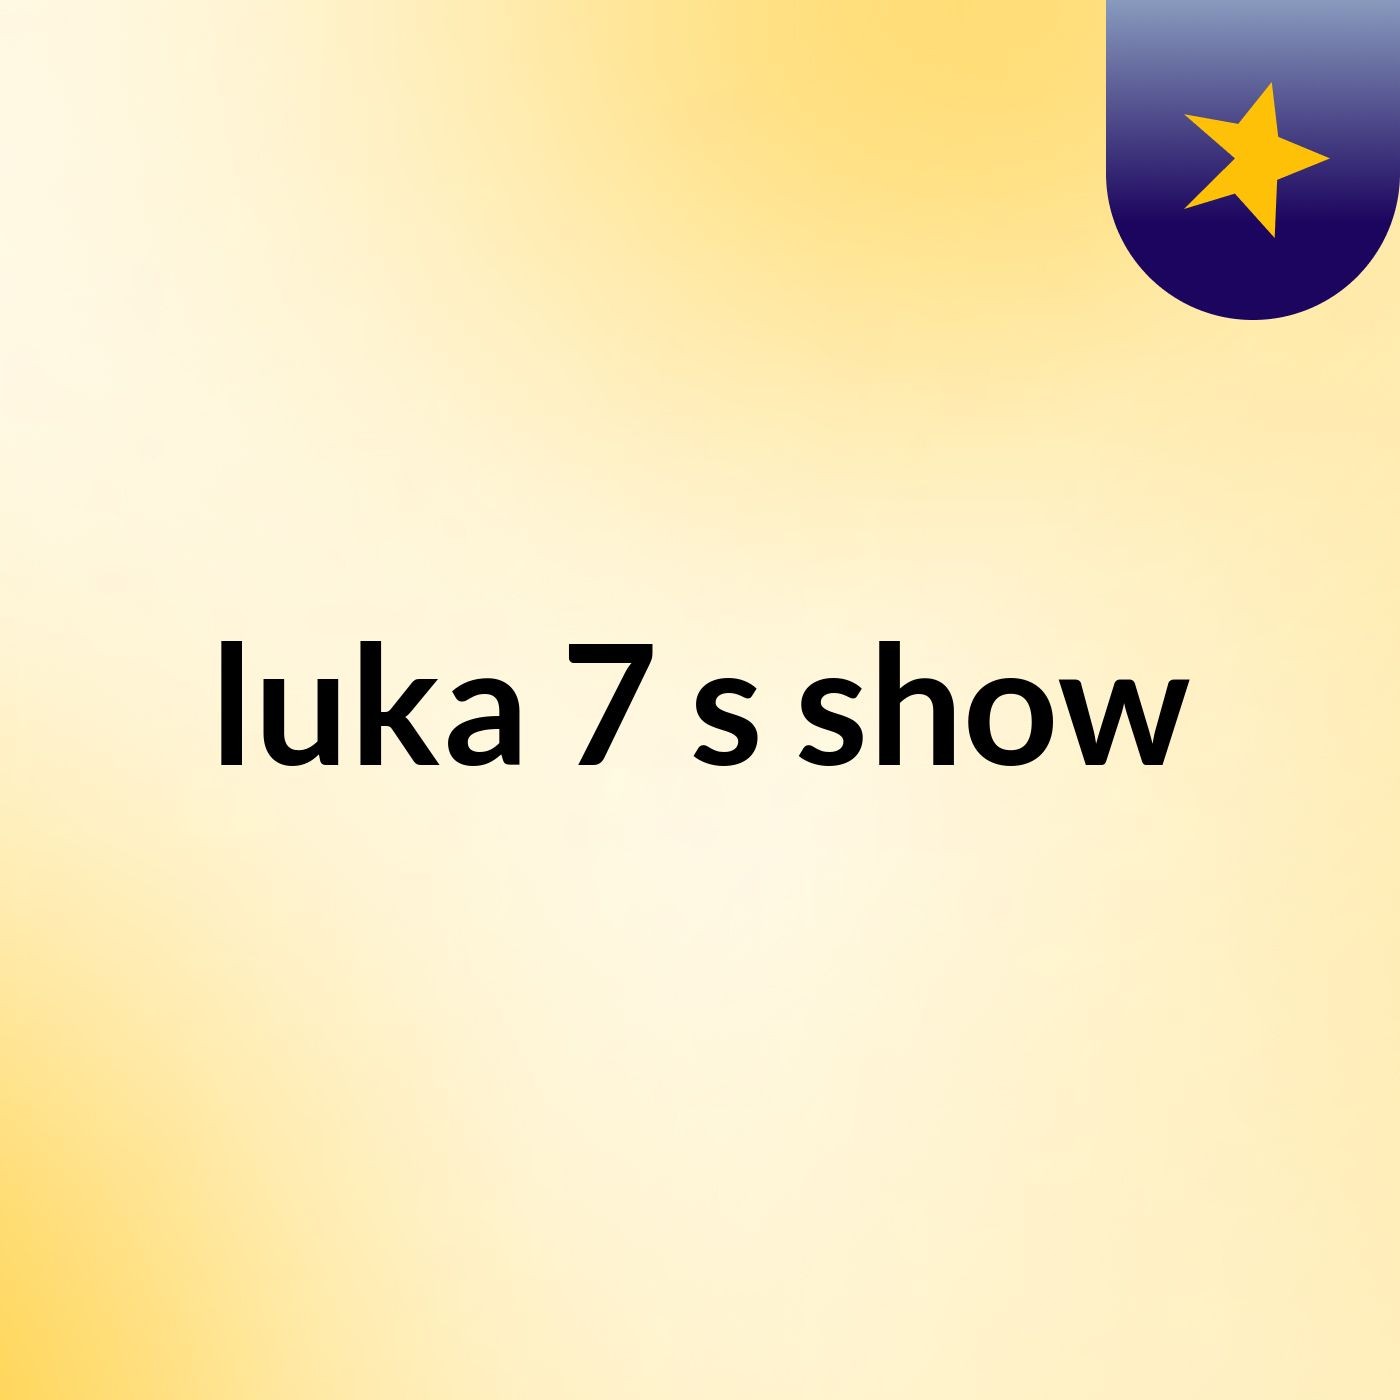 luka 7's show